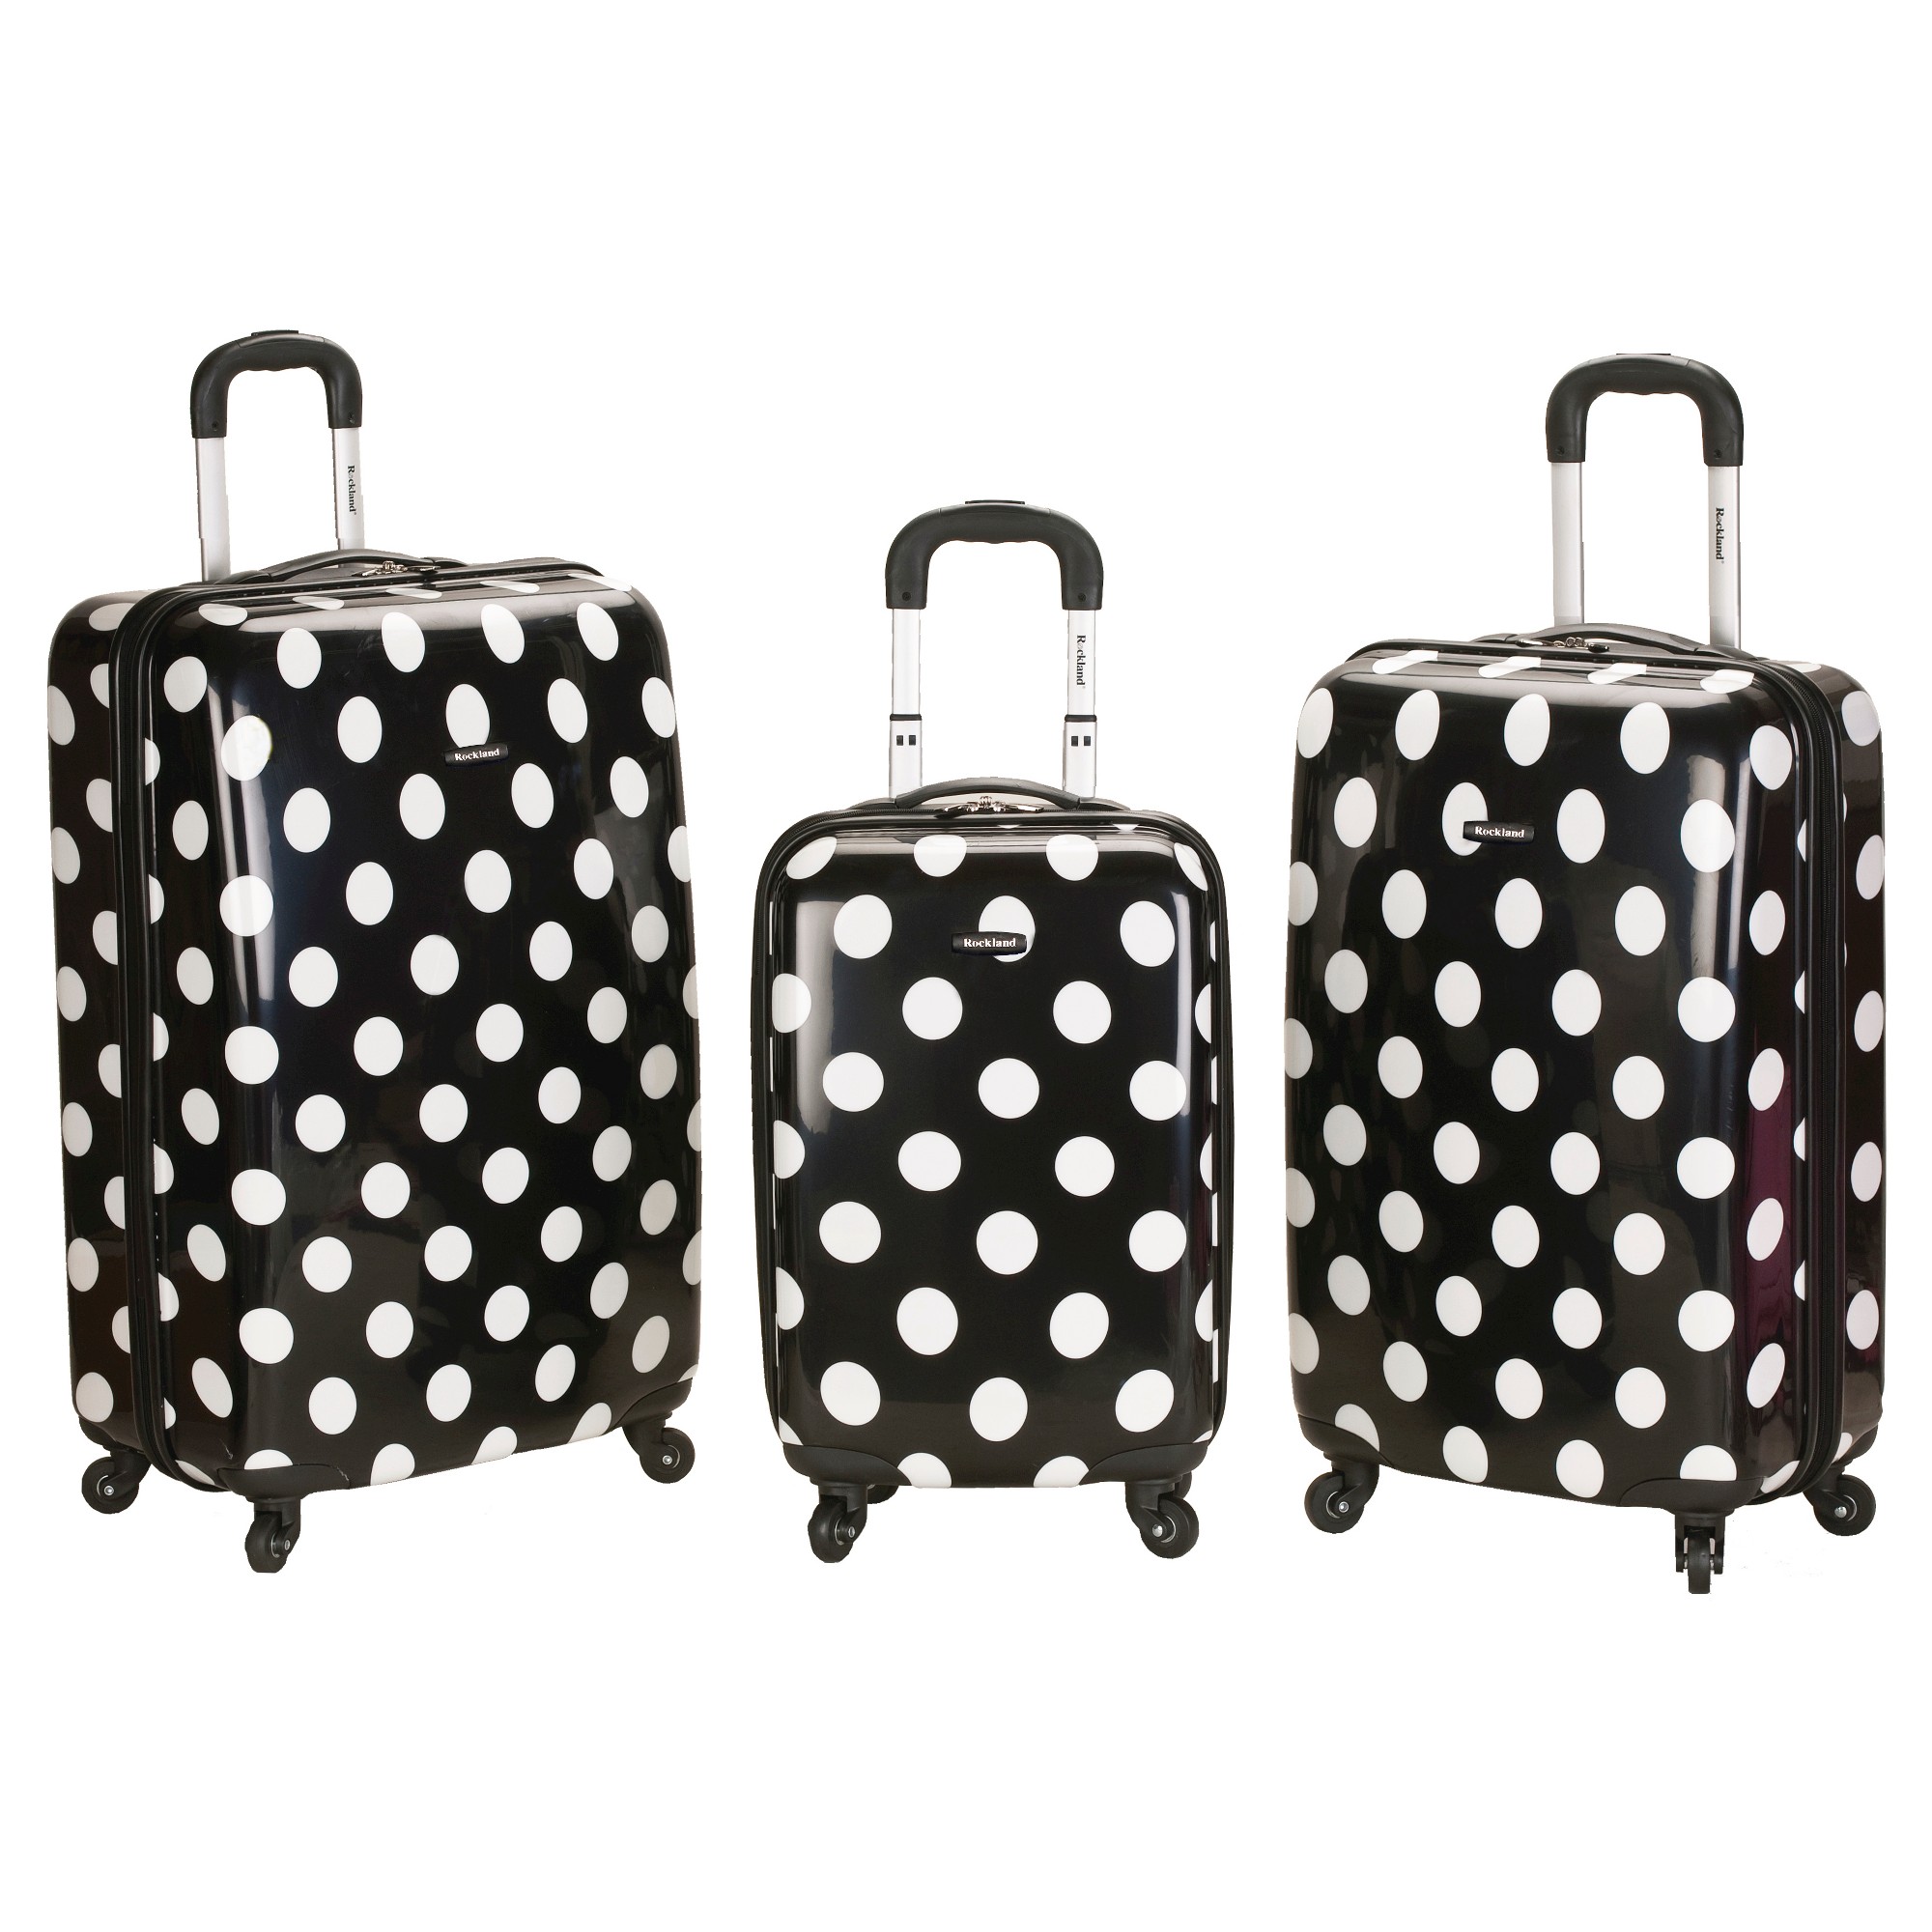 Rockland Laguna Beach 3pc ABS Spinner Luggage Set - Black Dot